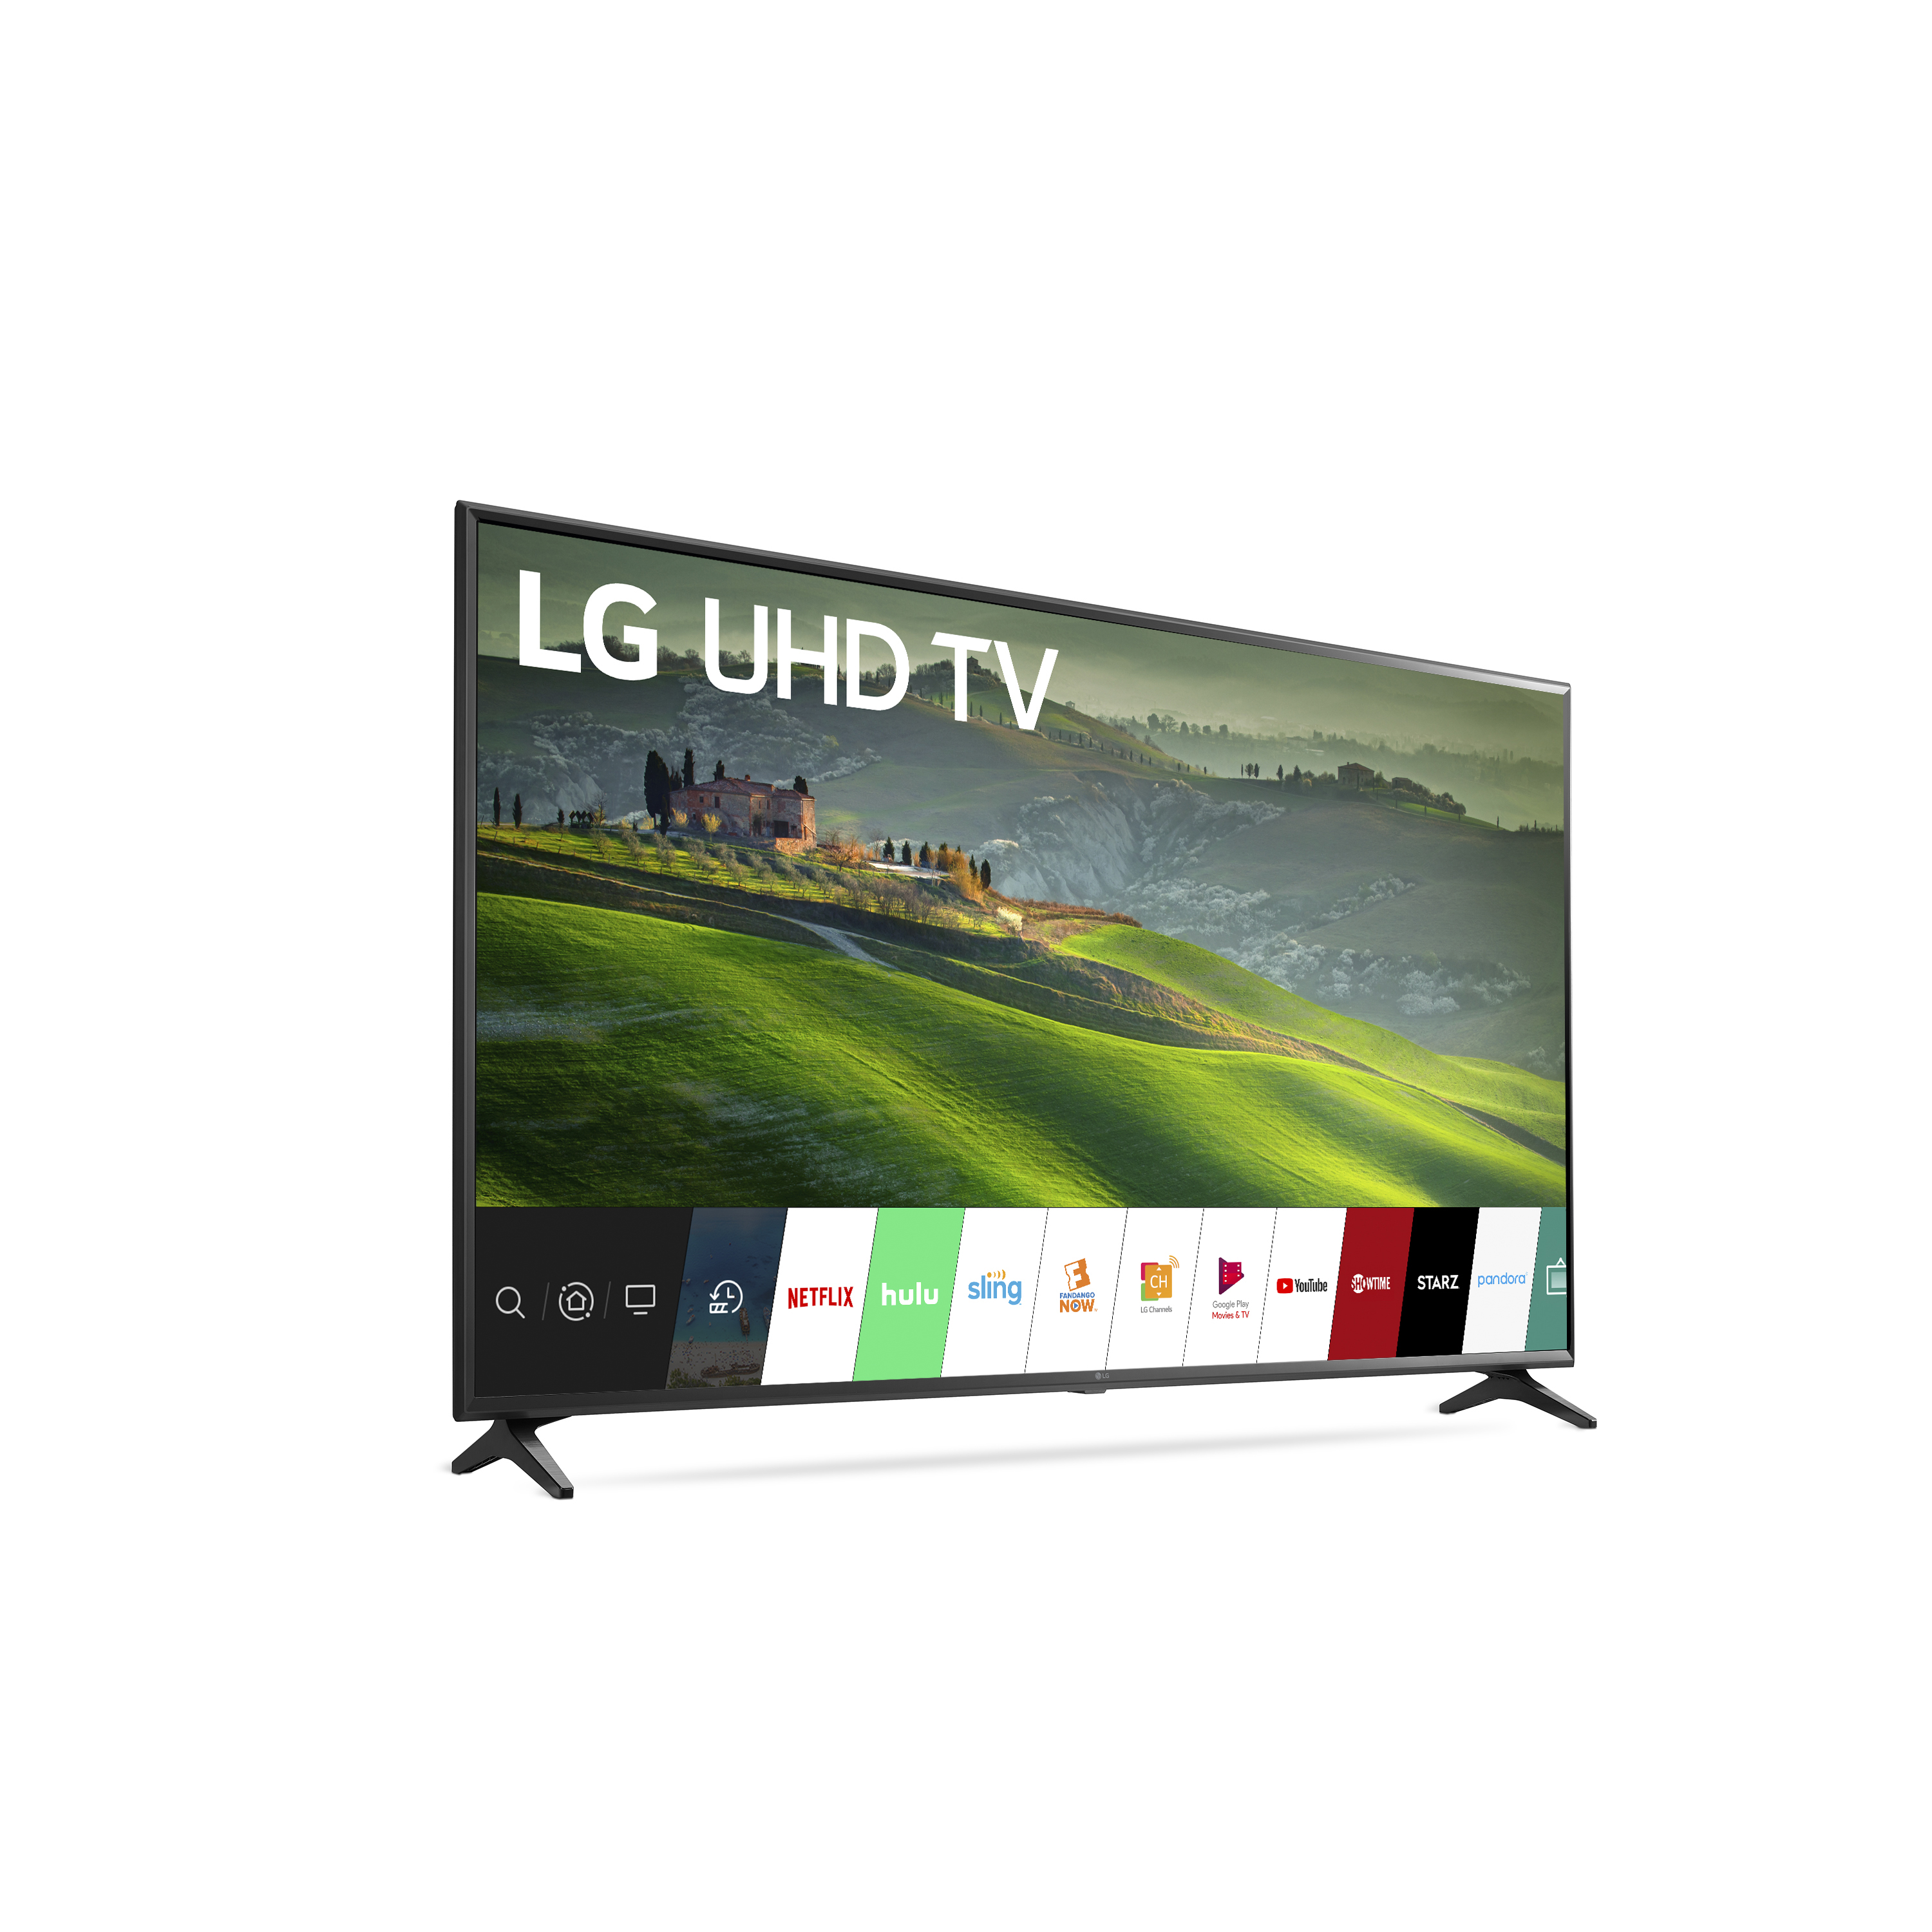 LG 65" Class 4K UHD 2160p LED Smart TV With HDR 65UM6900PUA - image 2 of 14